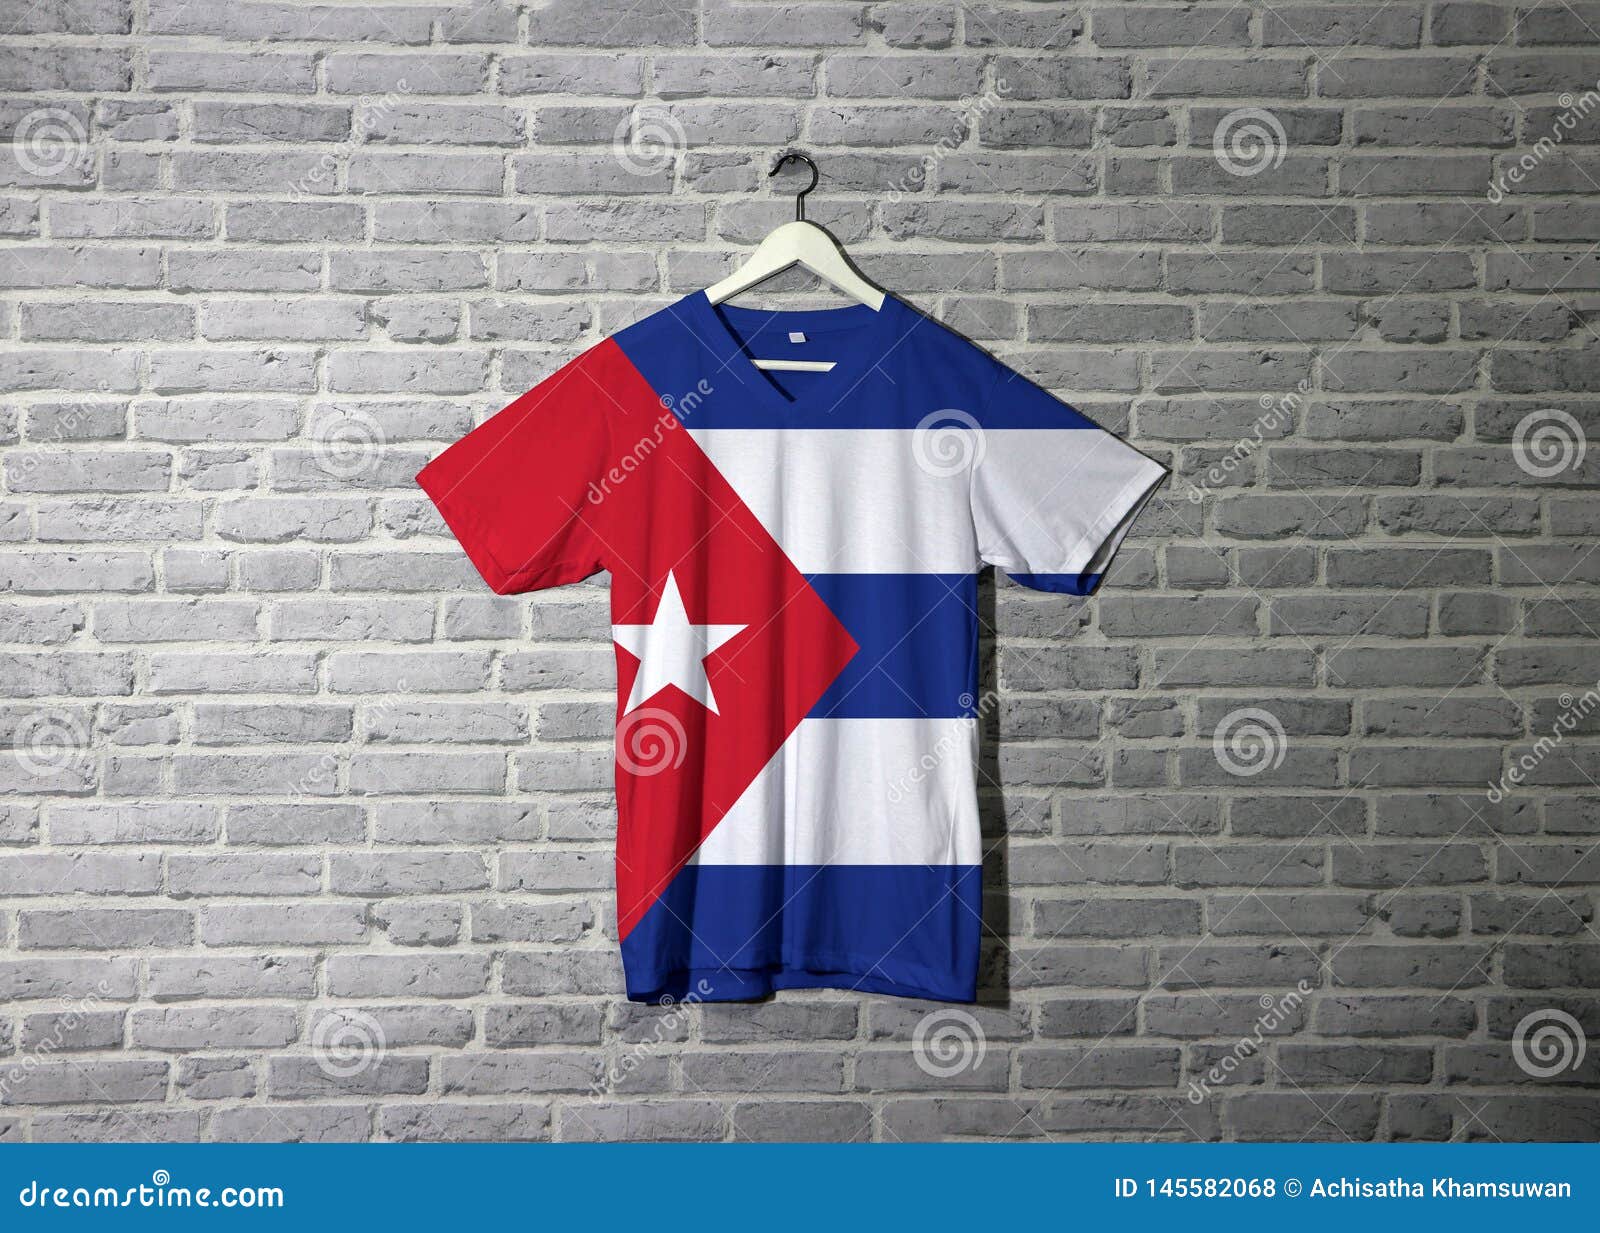 Cuban Flag Photos Download The BEST Free Cuban Flag Stock Photos  HD  Images